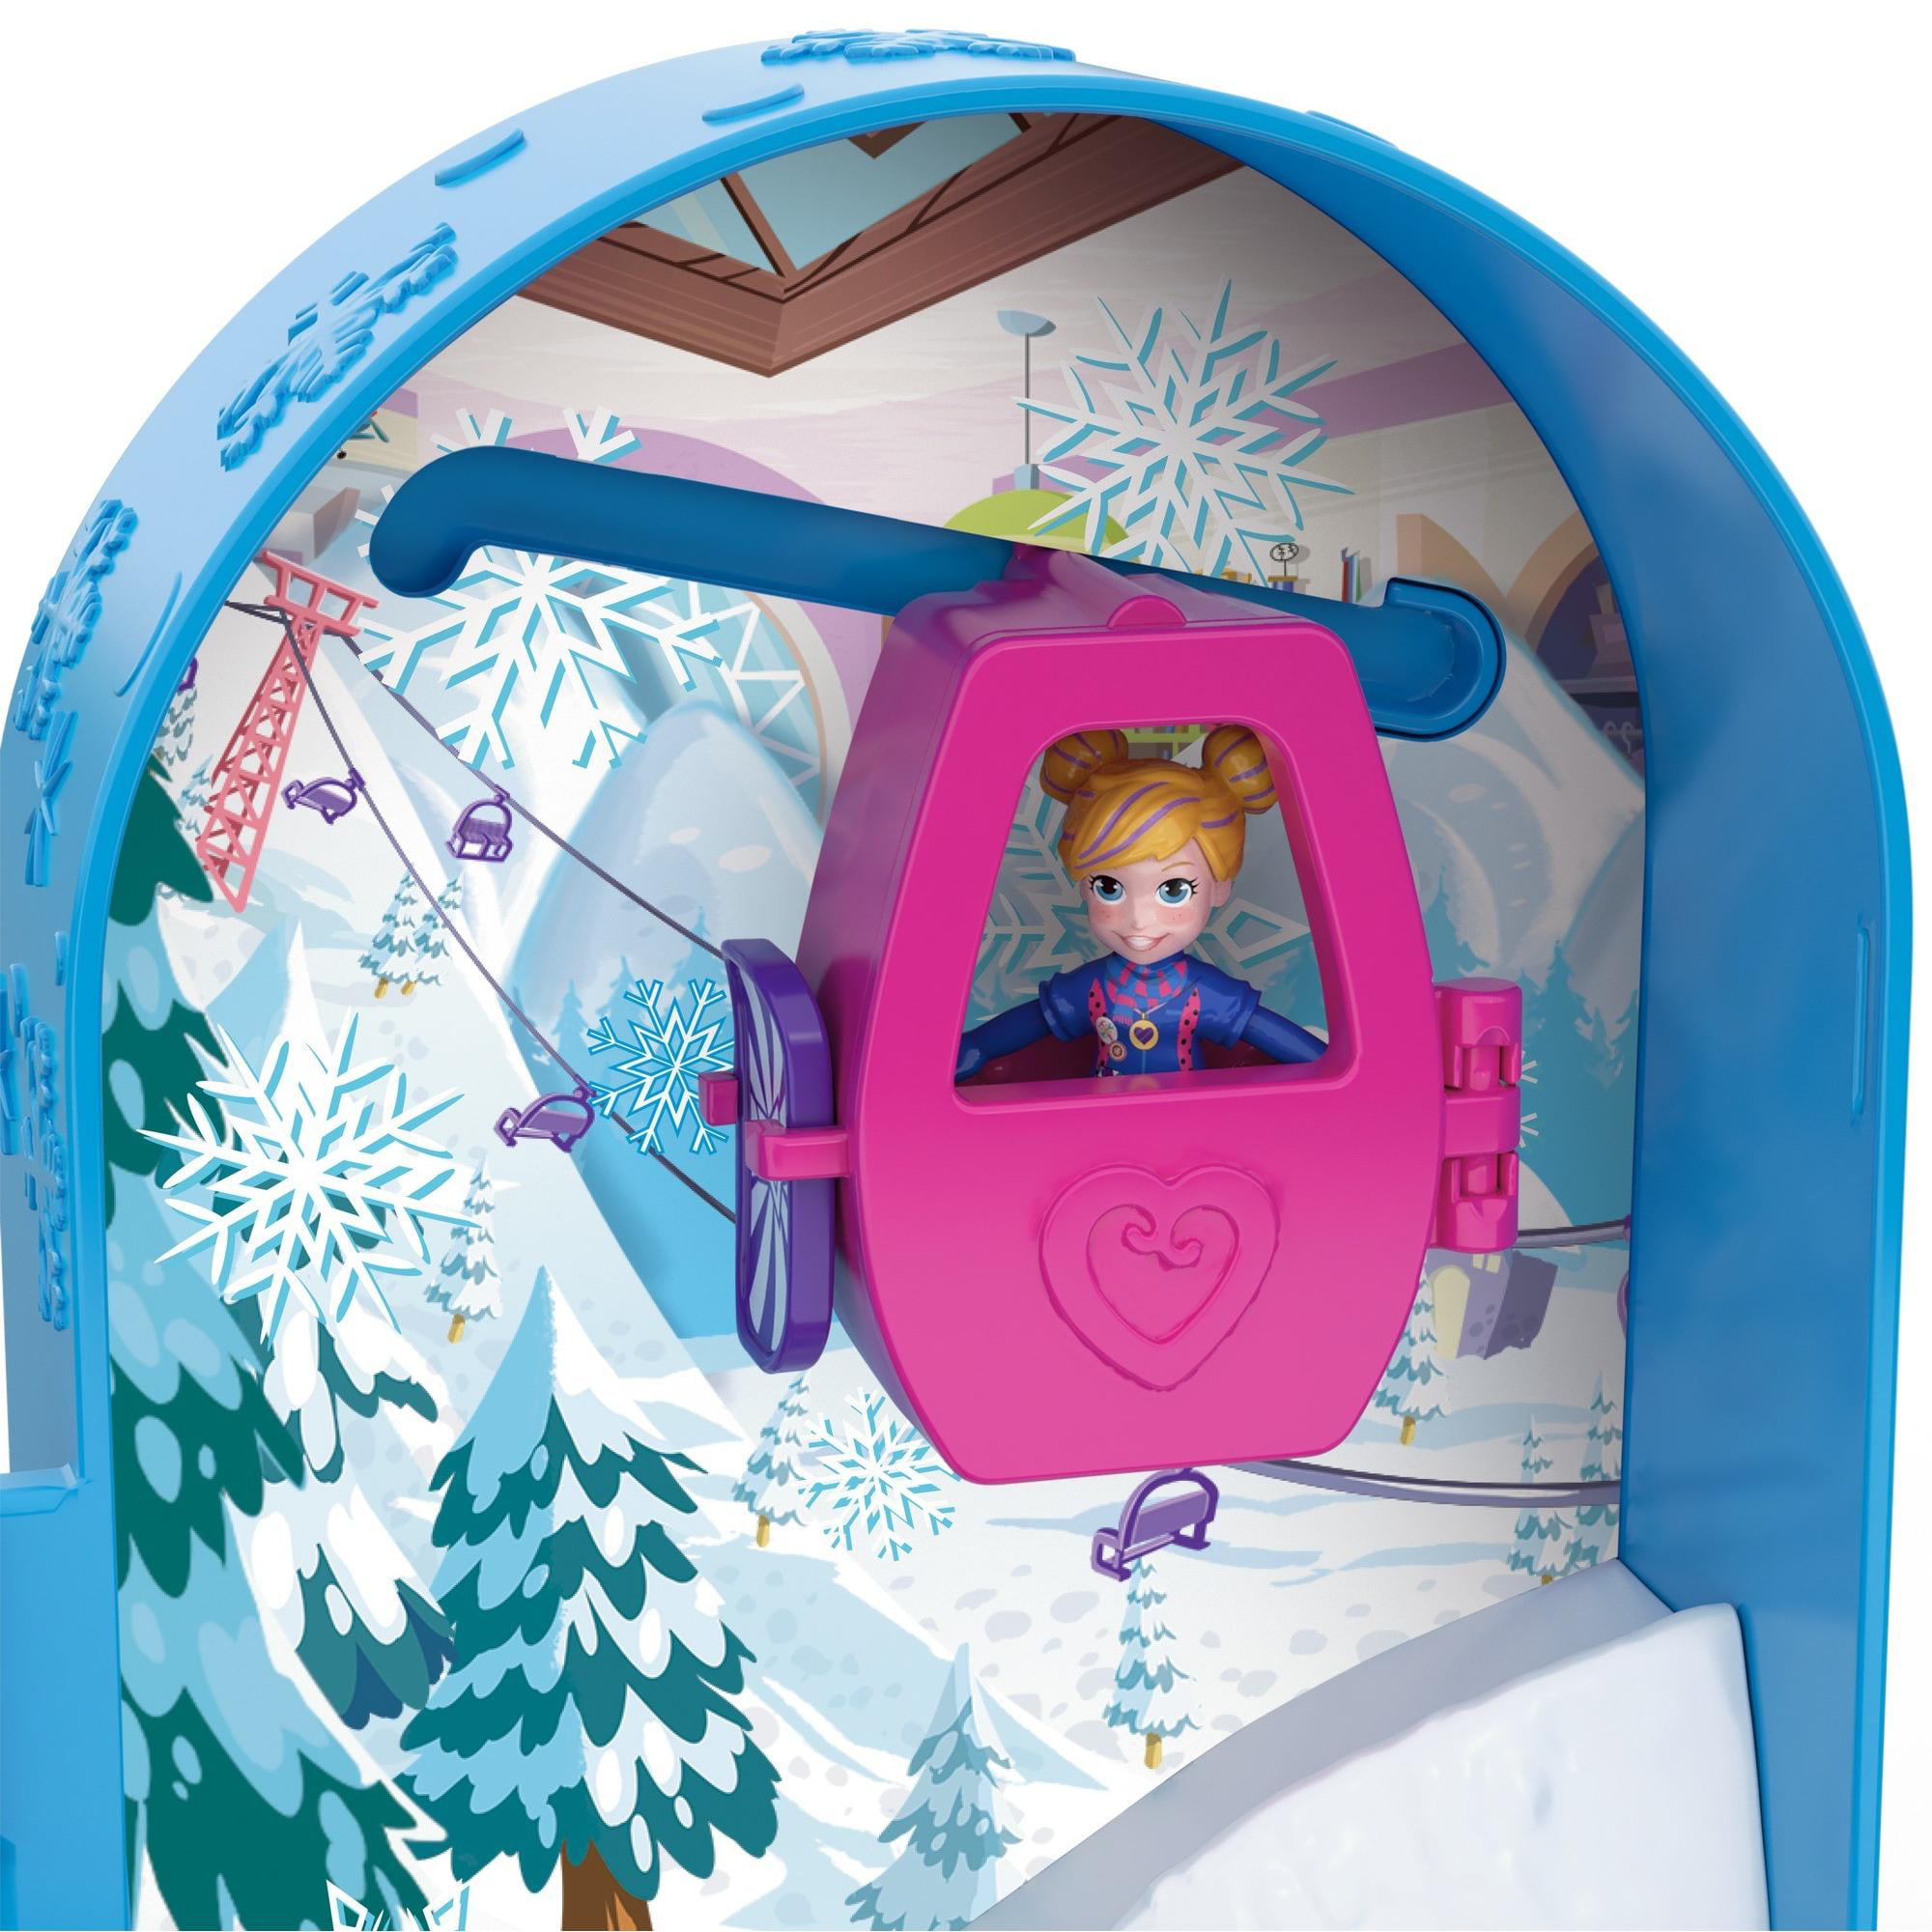 Polly Pocket Winter Snow World Secret Compact Play Set Kids Toys Christmas Gift 